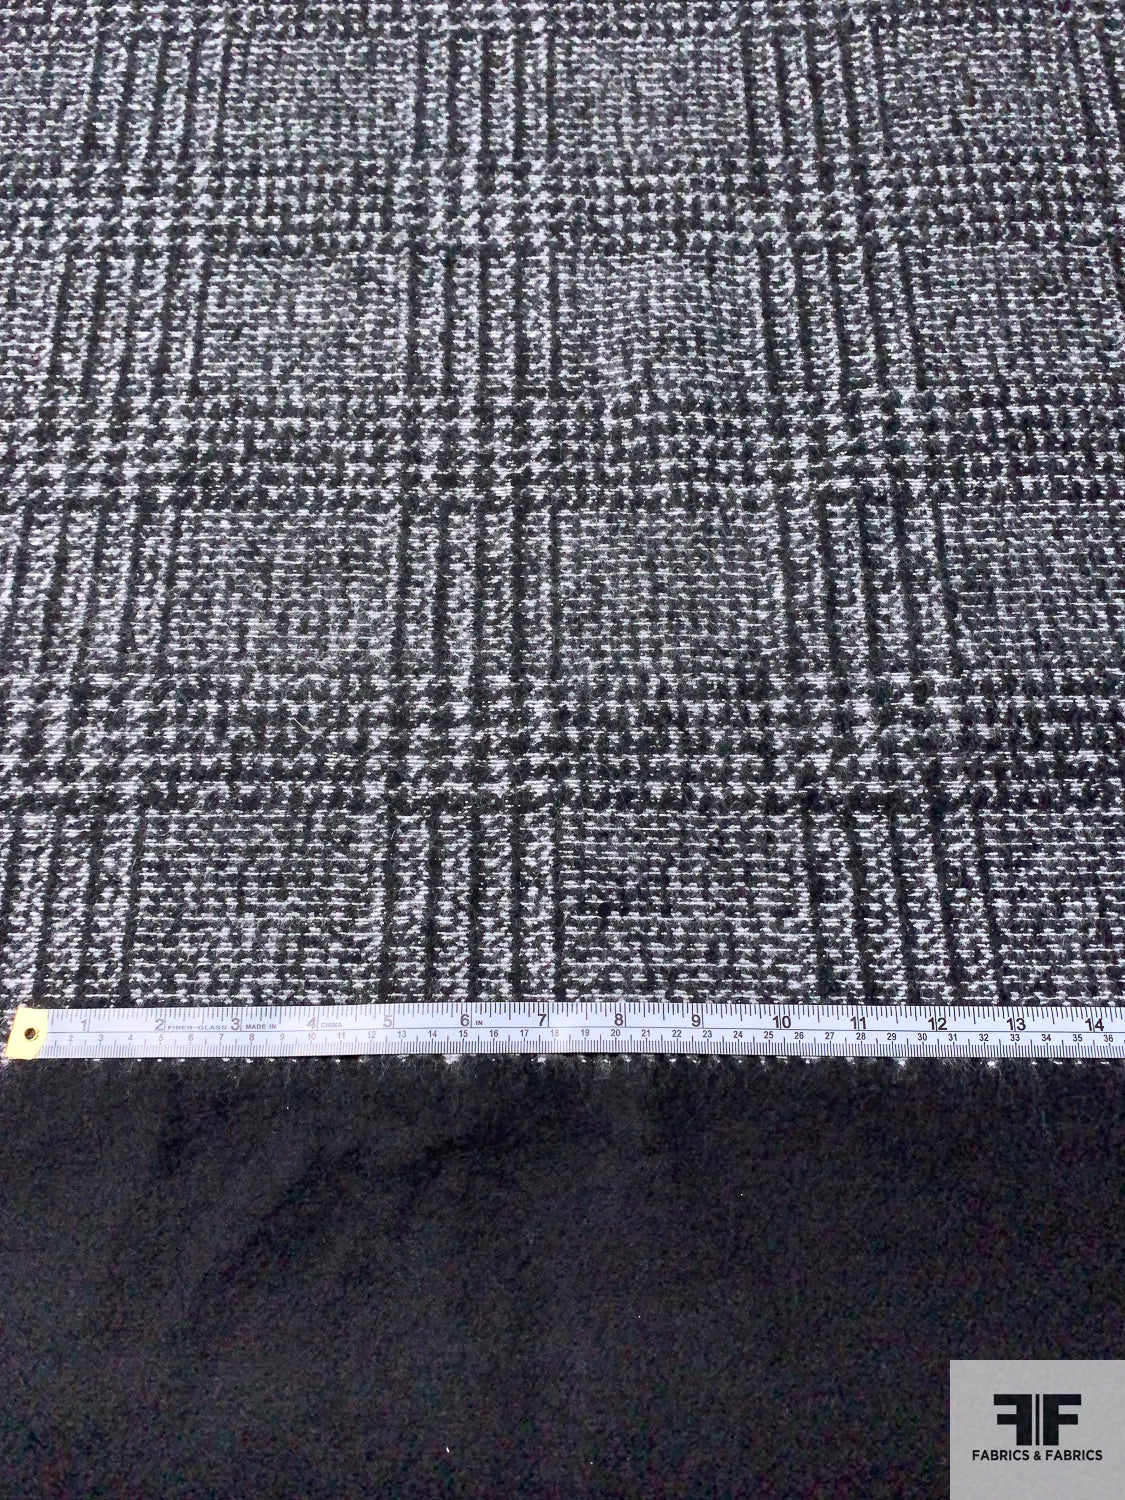 Italian Glen Plaid Wool Blend Brushed Tweed Panel - Grey / Charcoal / Black